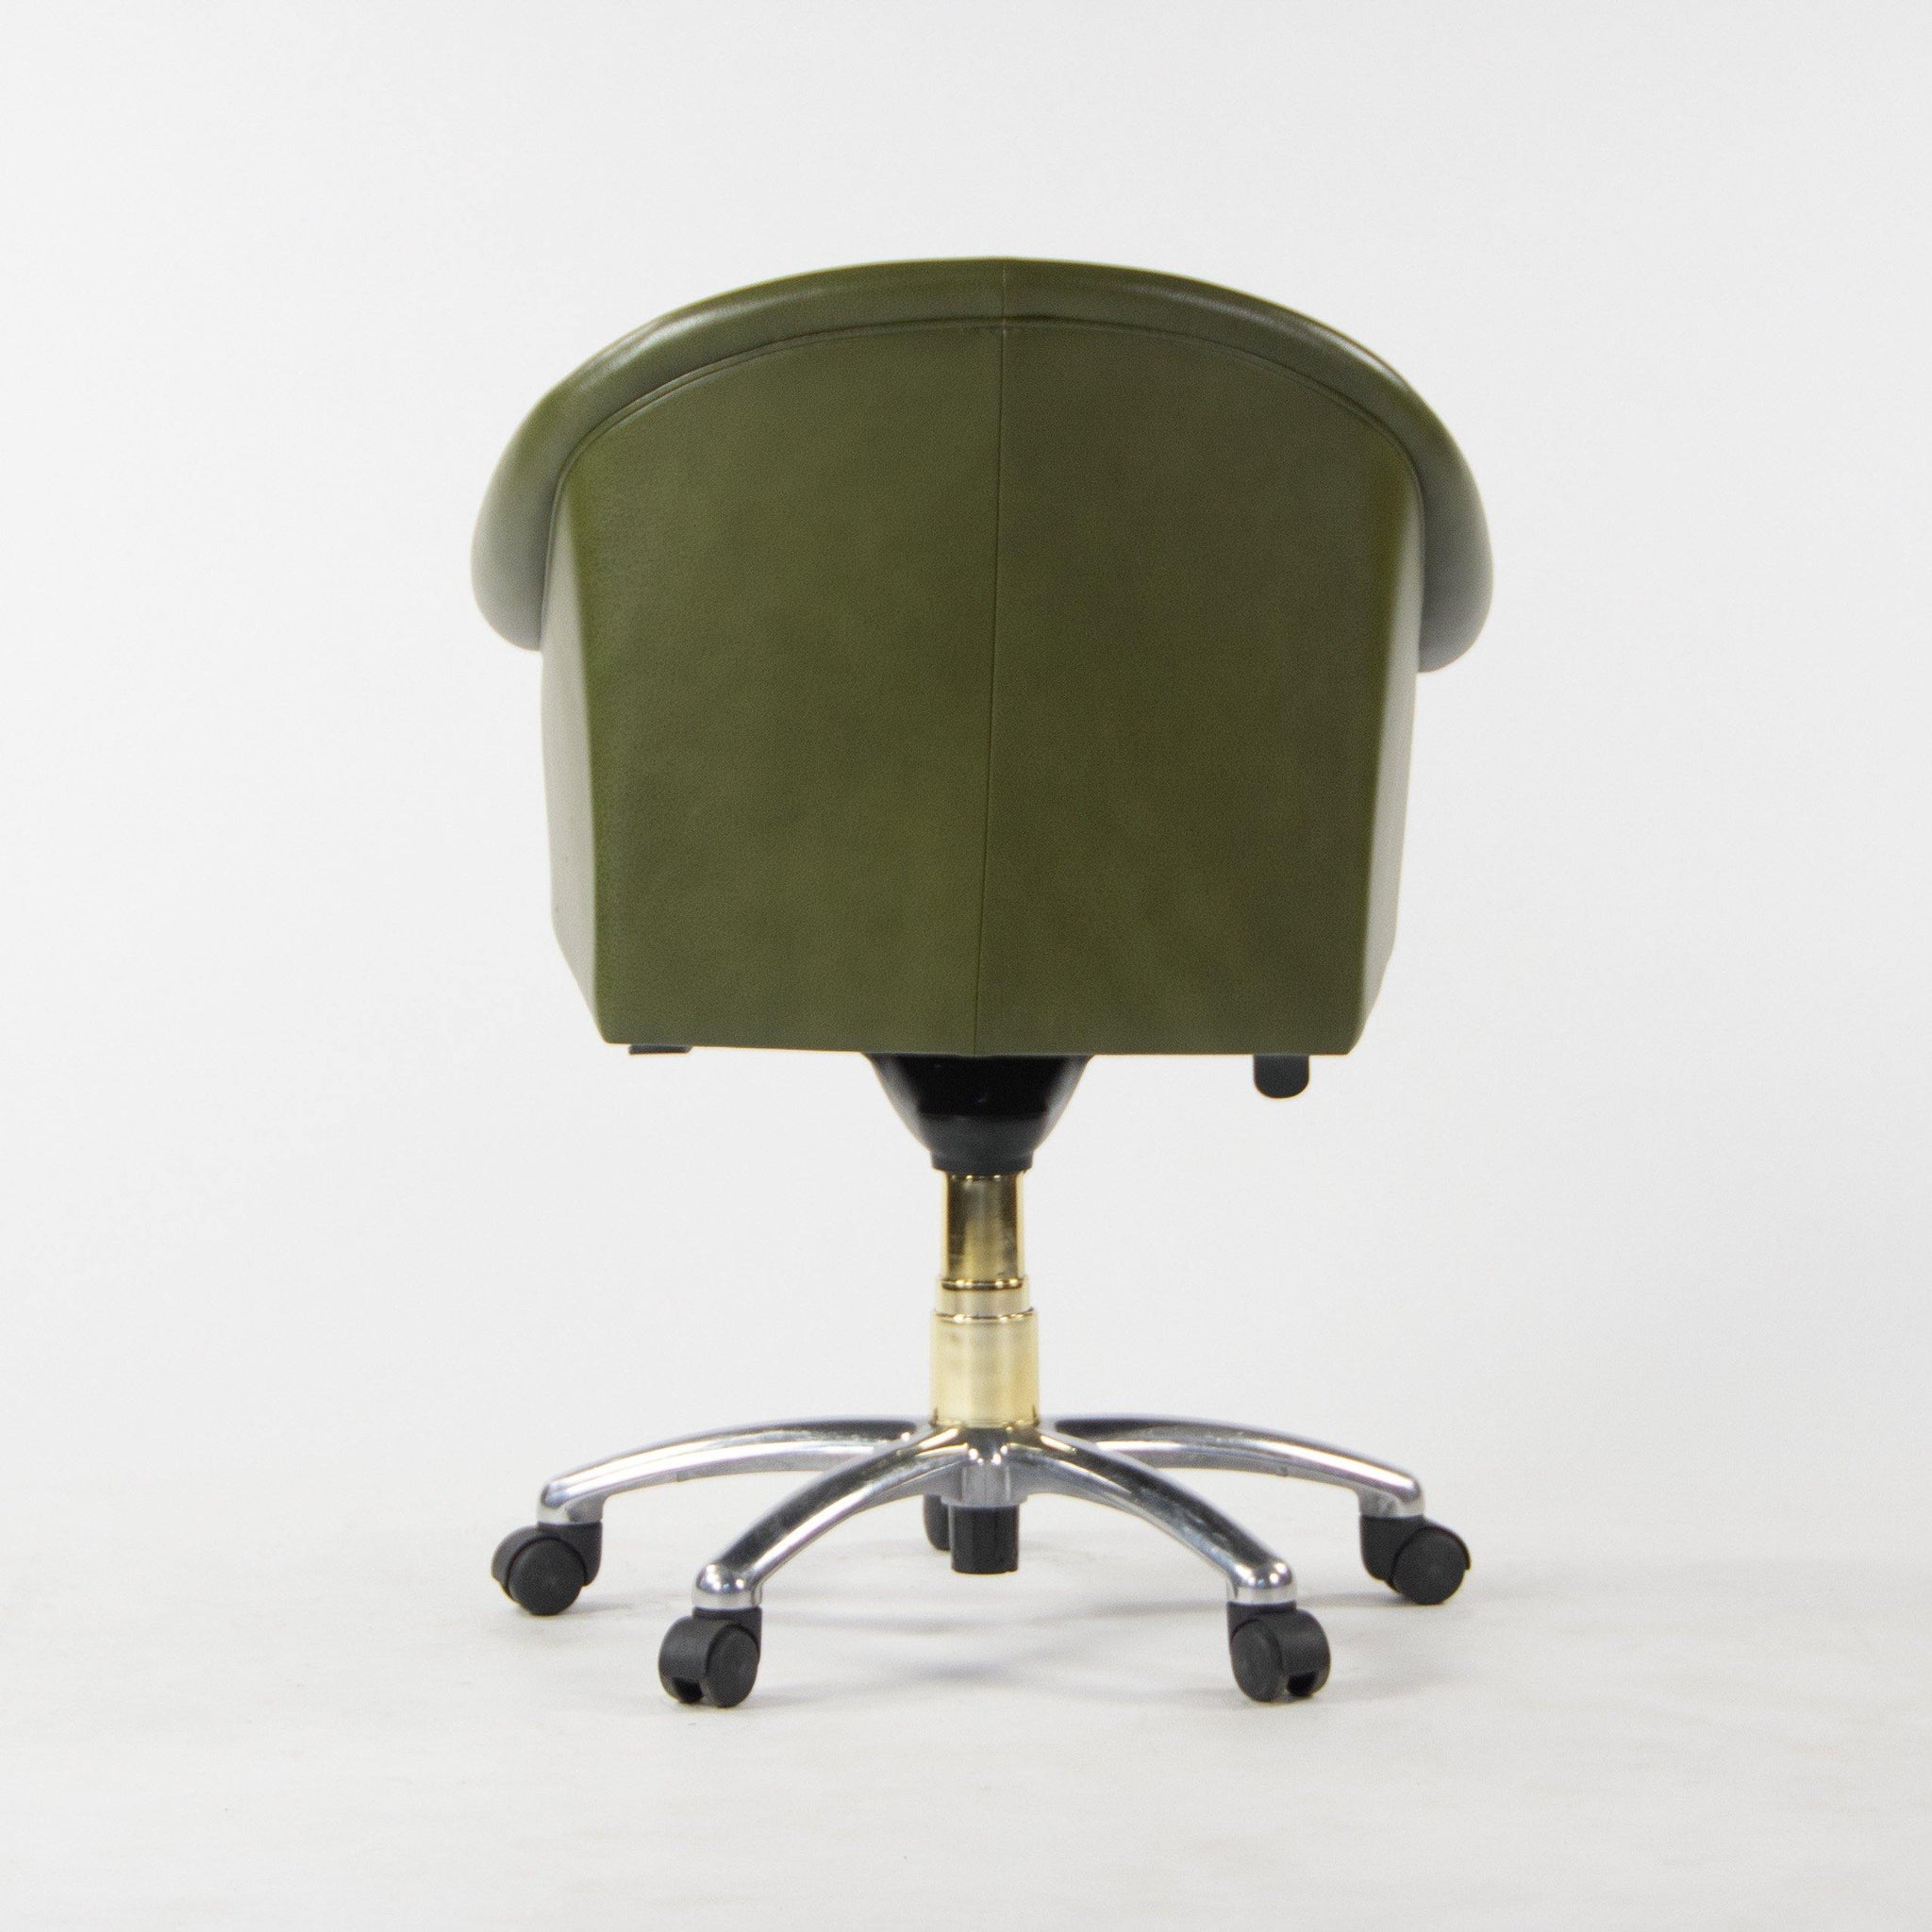 Poltrona Frau Green Leather Luca Scacchetti Sinan Office Desk Chair Mult Avail - Rarify Inc.